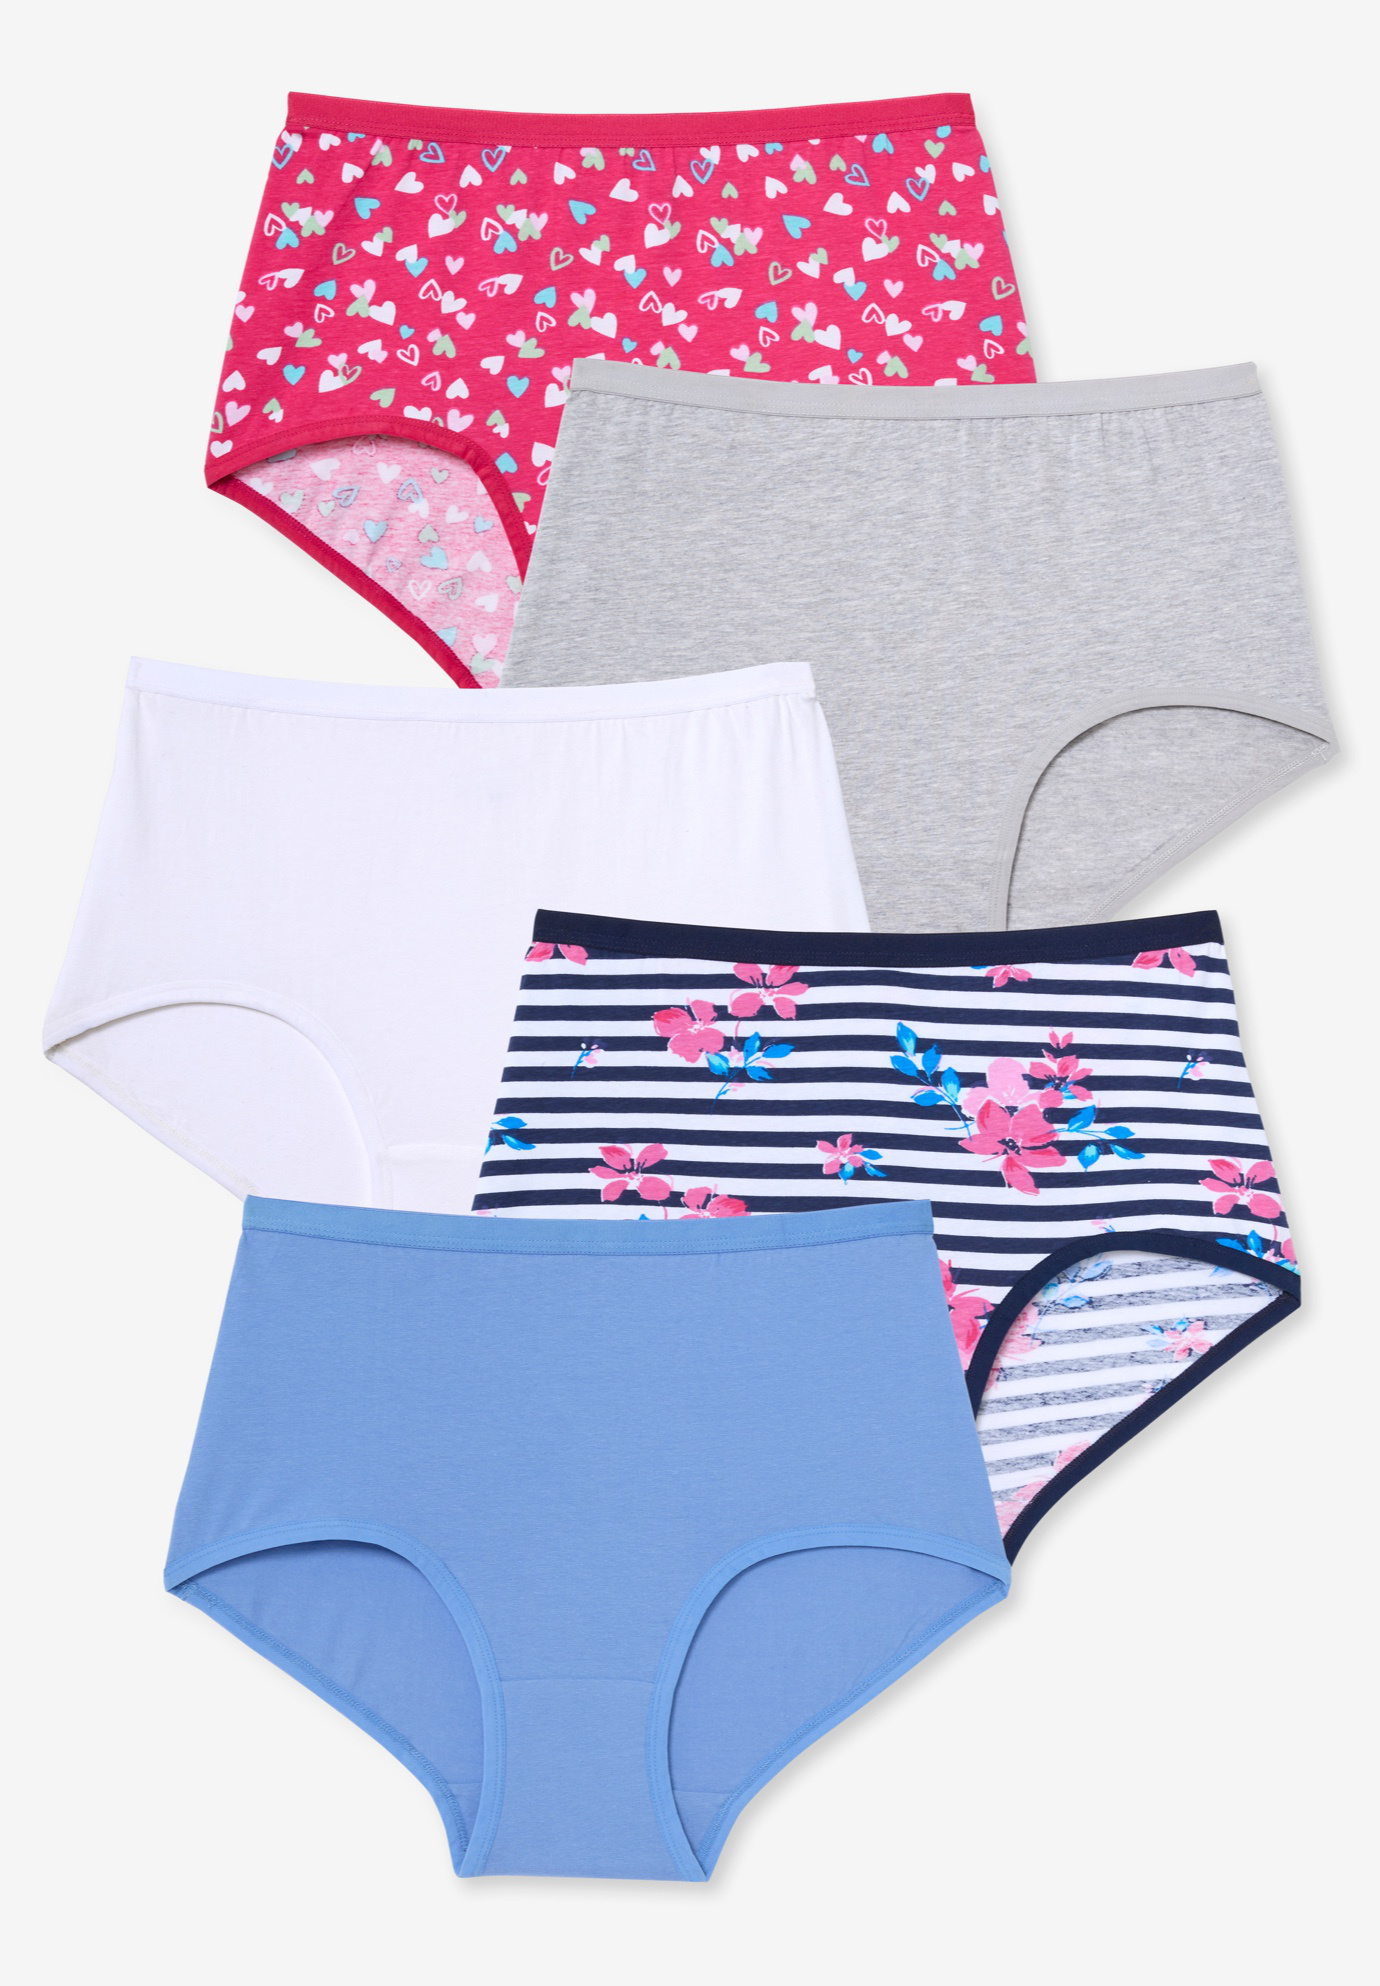 Hanes Women's Boyshorts Underwear 12-Pack Only $6.98 on